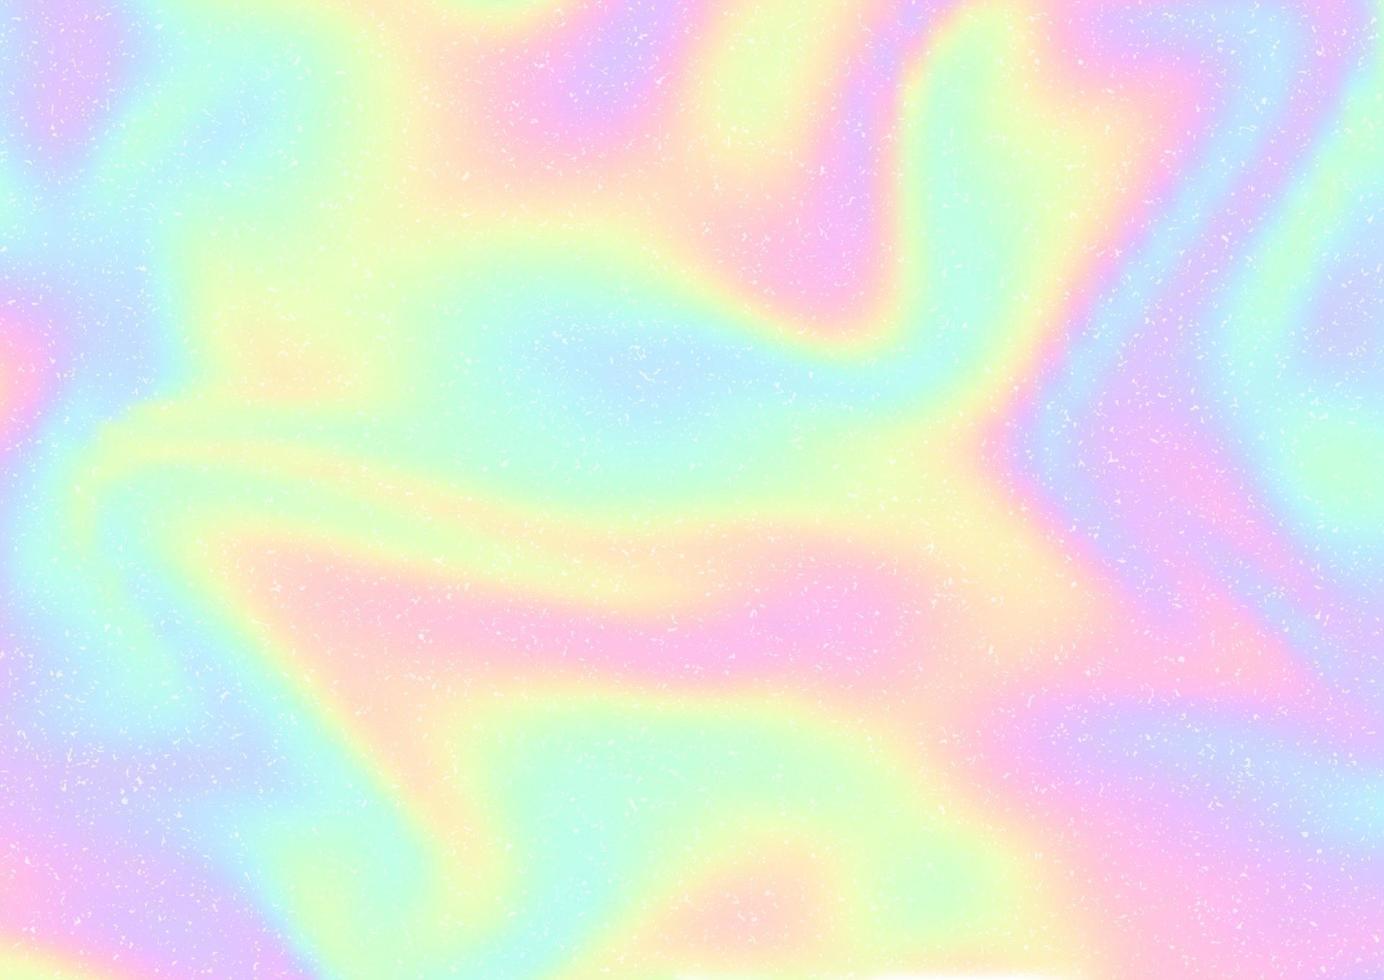 Farbverlaufsunschärfe mit körniger Textur vektor